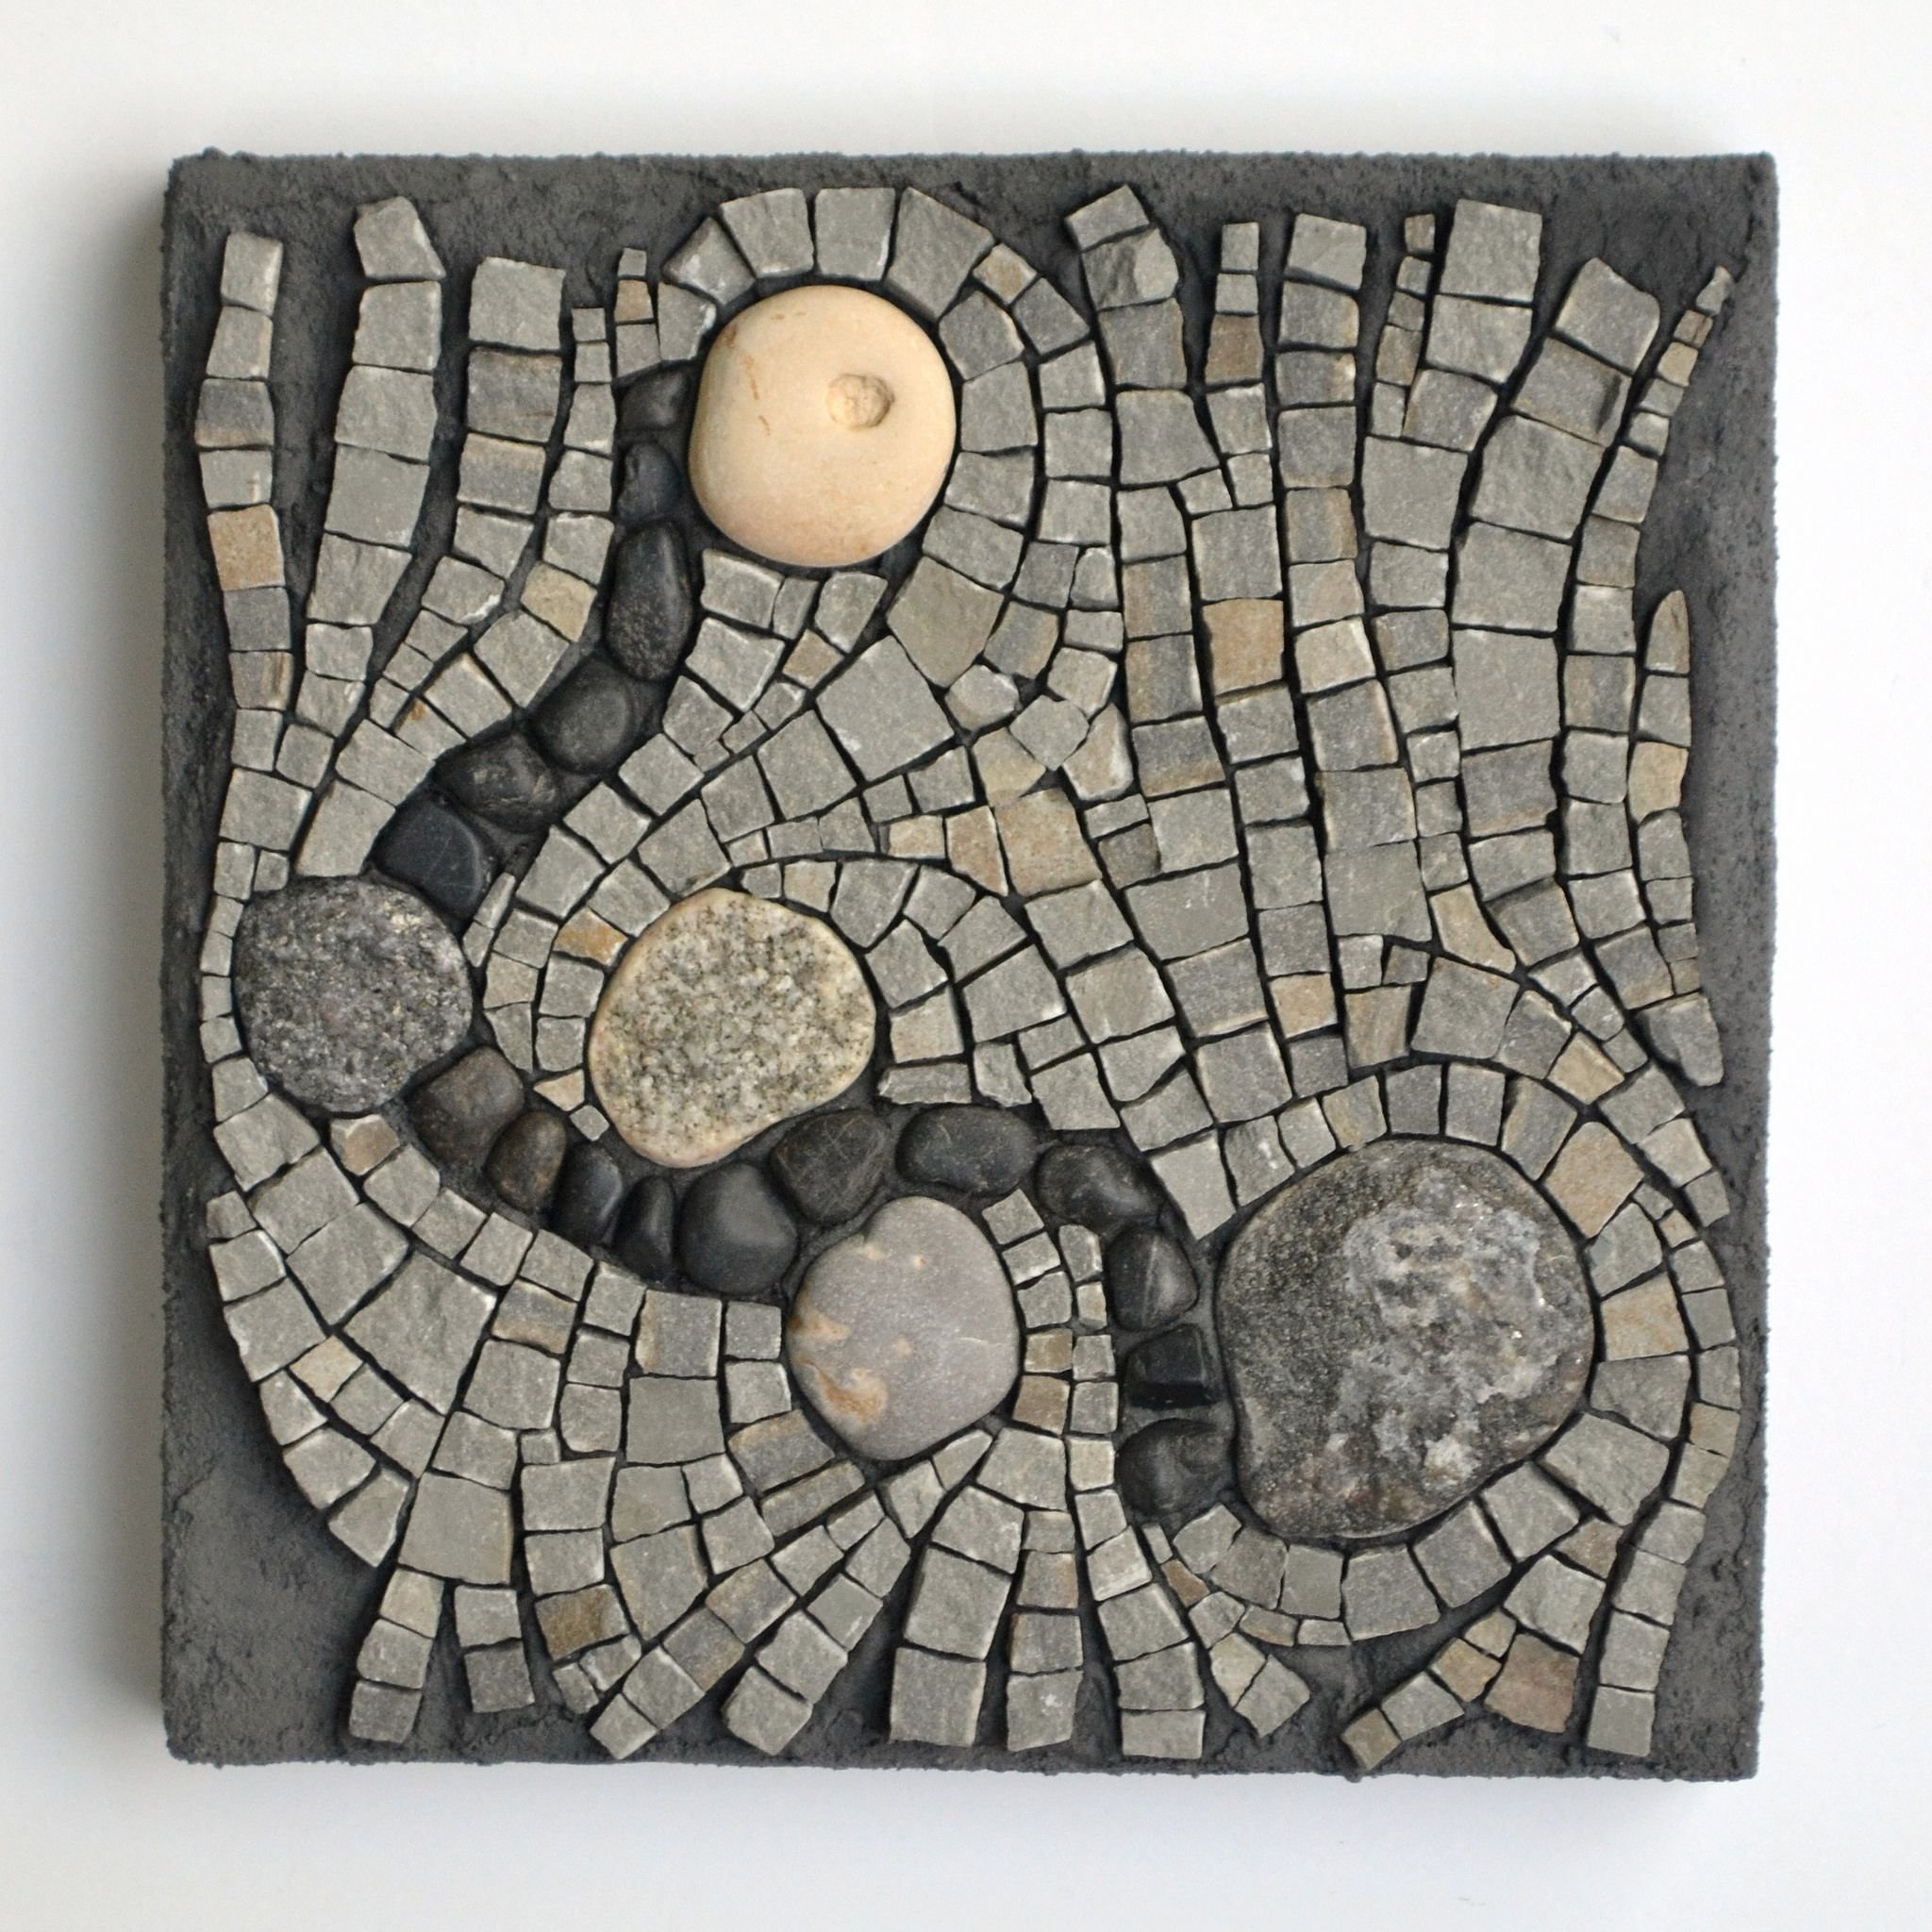 Мозаичный камень. Мозаика из каменных плиточек. Мозаика каменная gh2001 мозаика каменная. Мозаичное панно из галечника. Pebble-Mosaic-Stone-Mosaic.